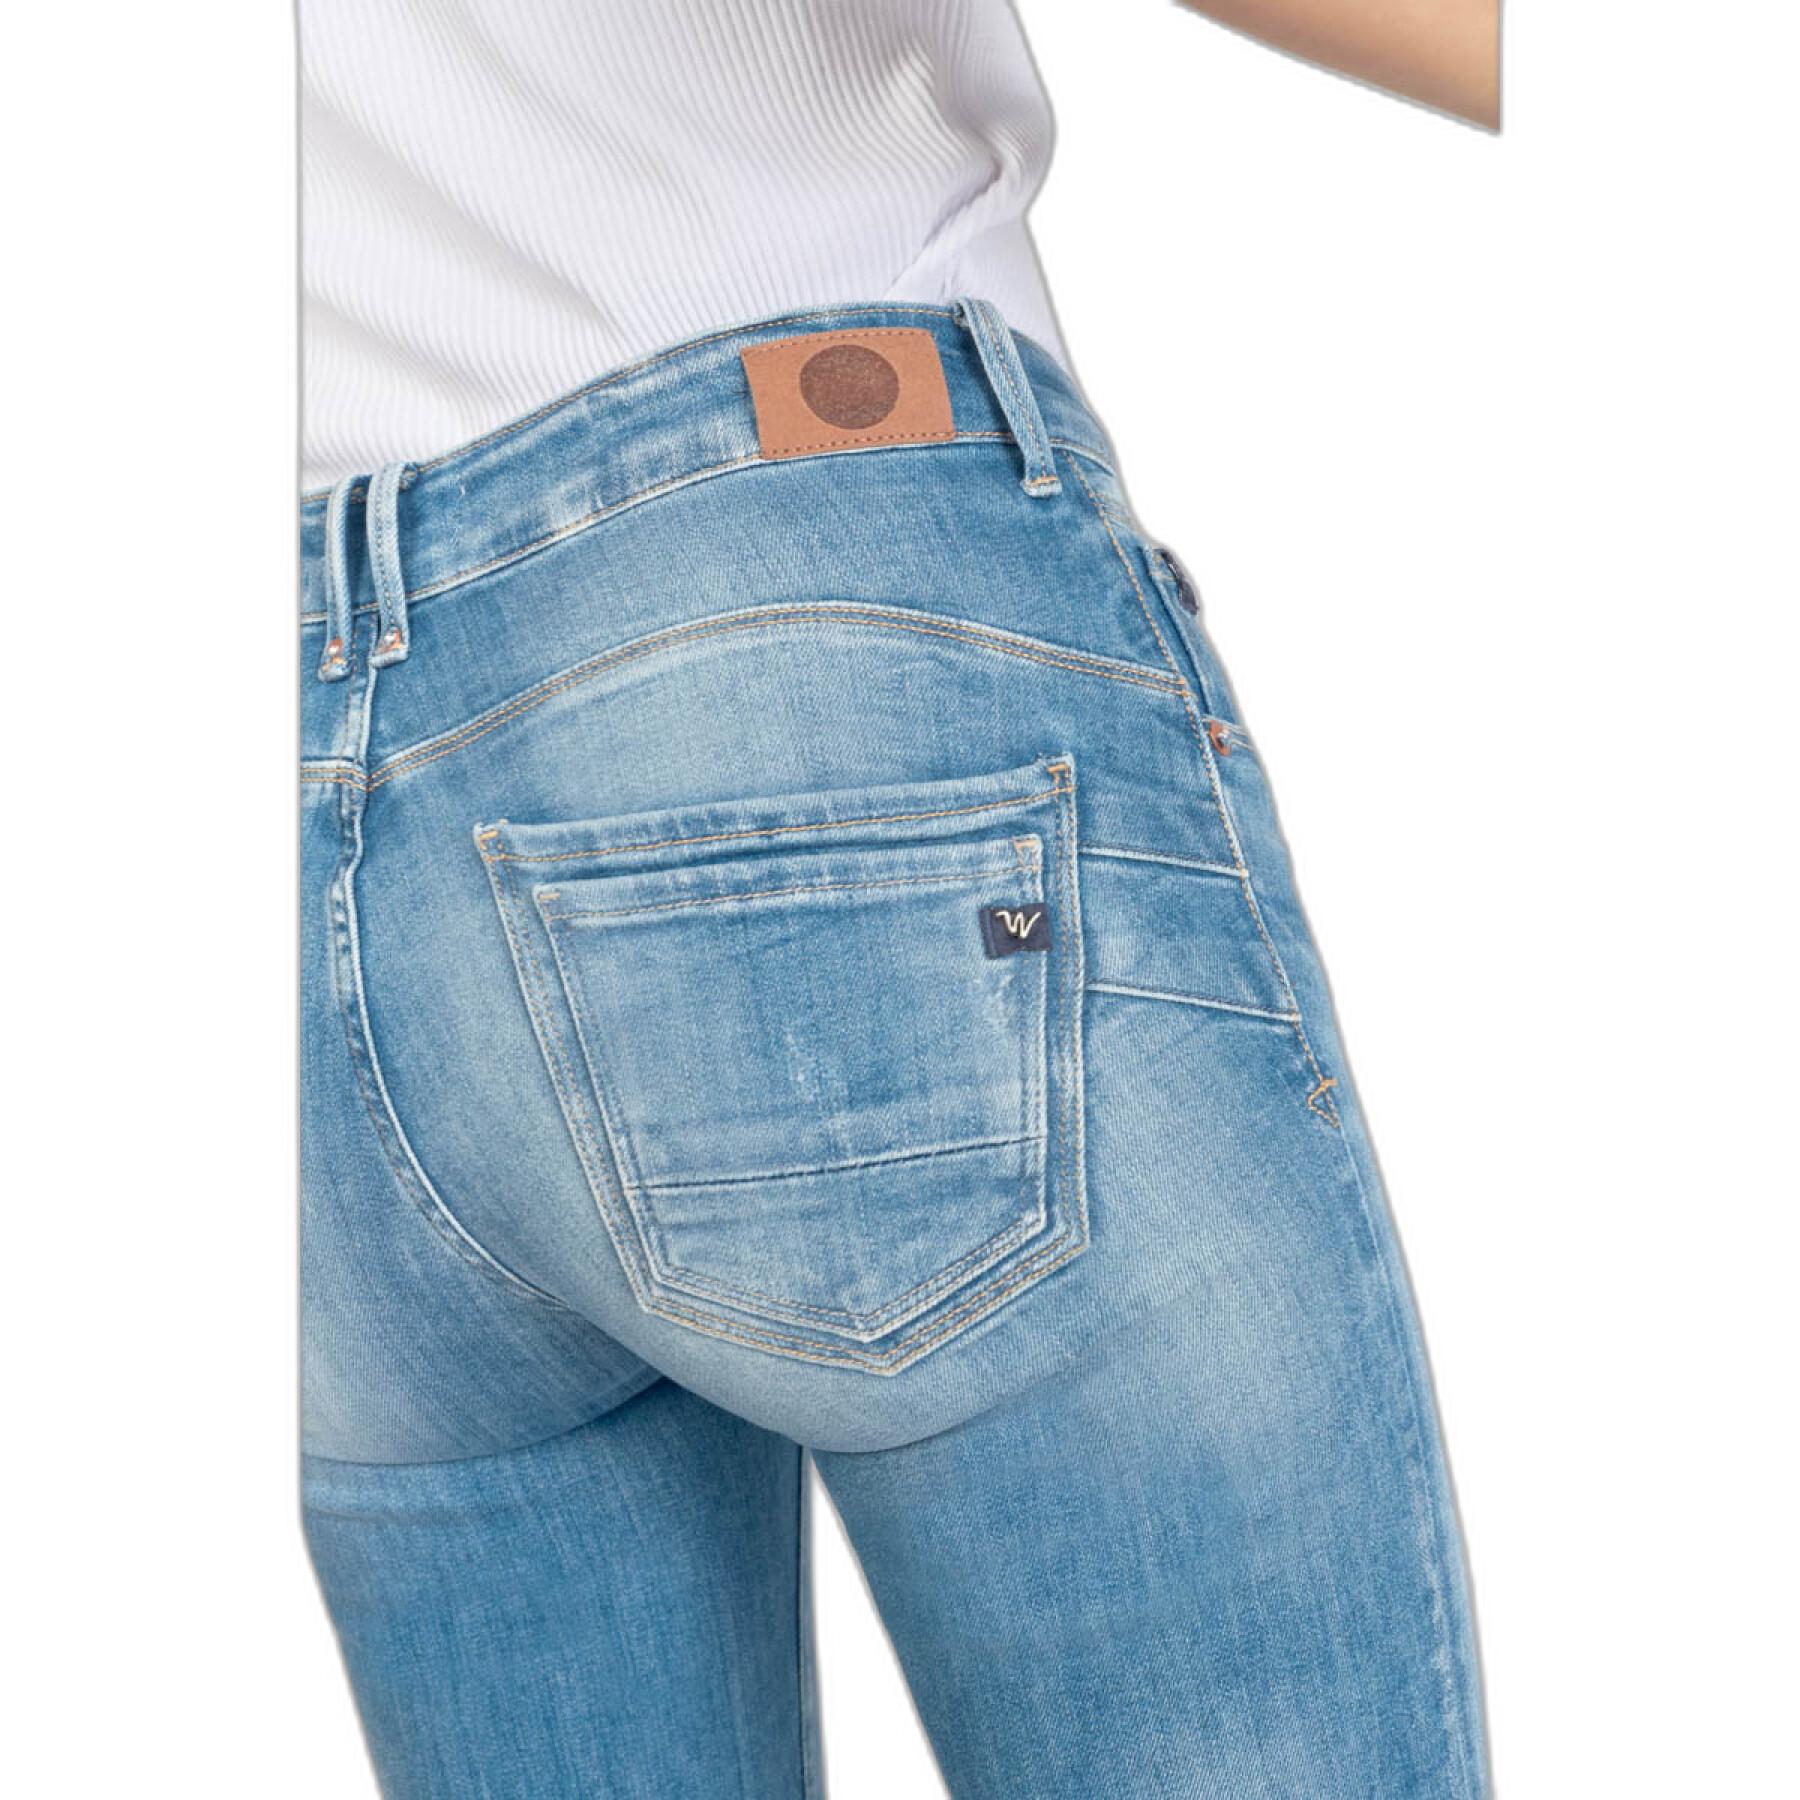 Jeans cintura alta mujer Le Temps des cerises Pulp Flare Axis